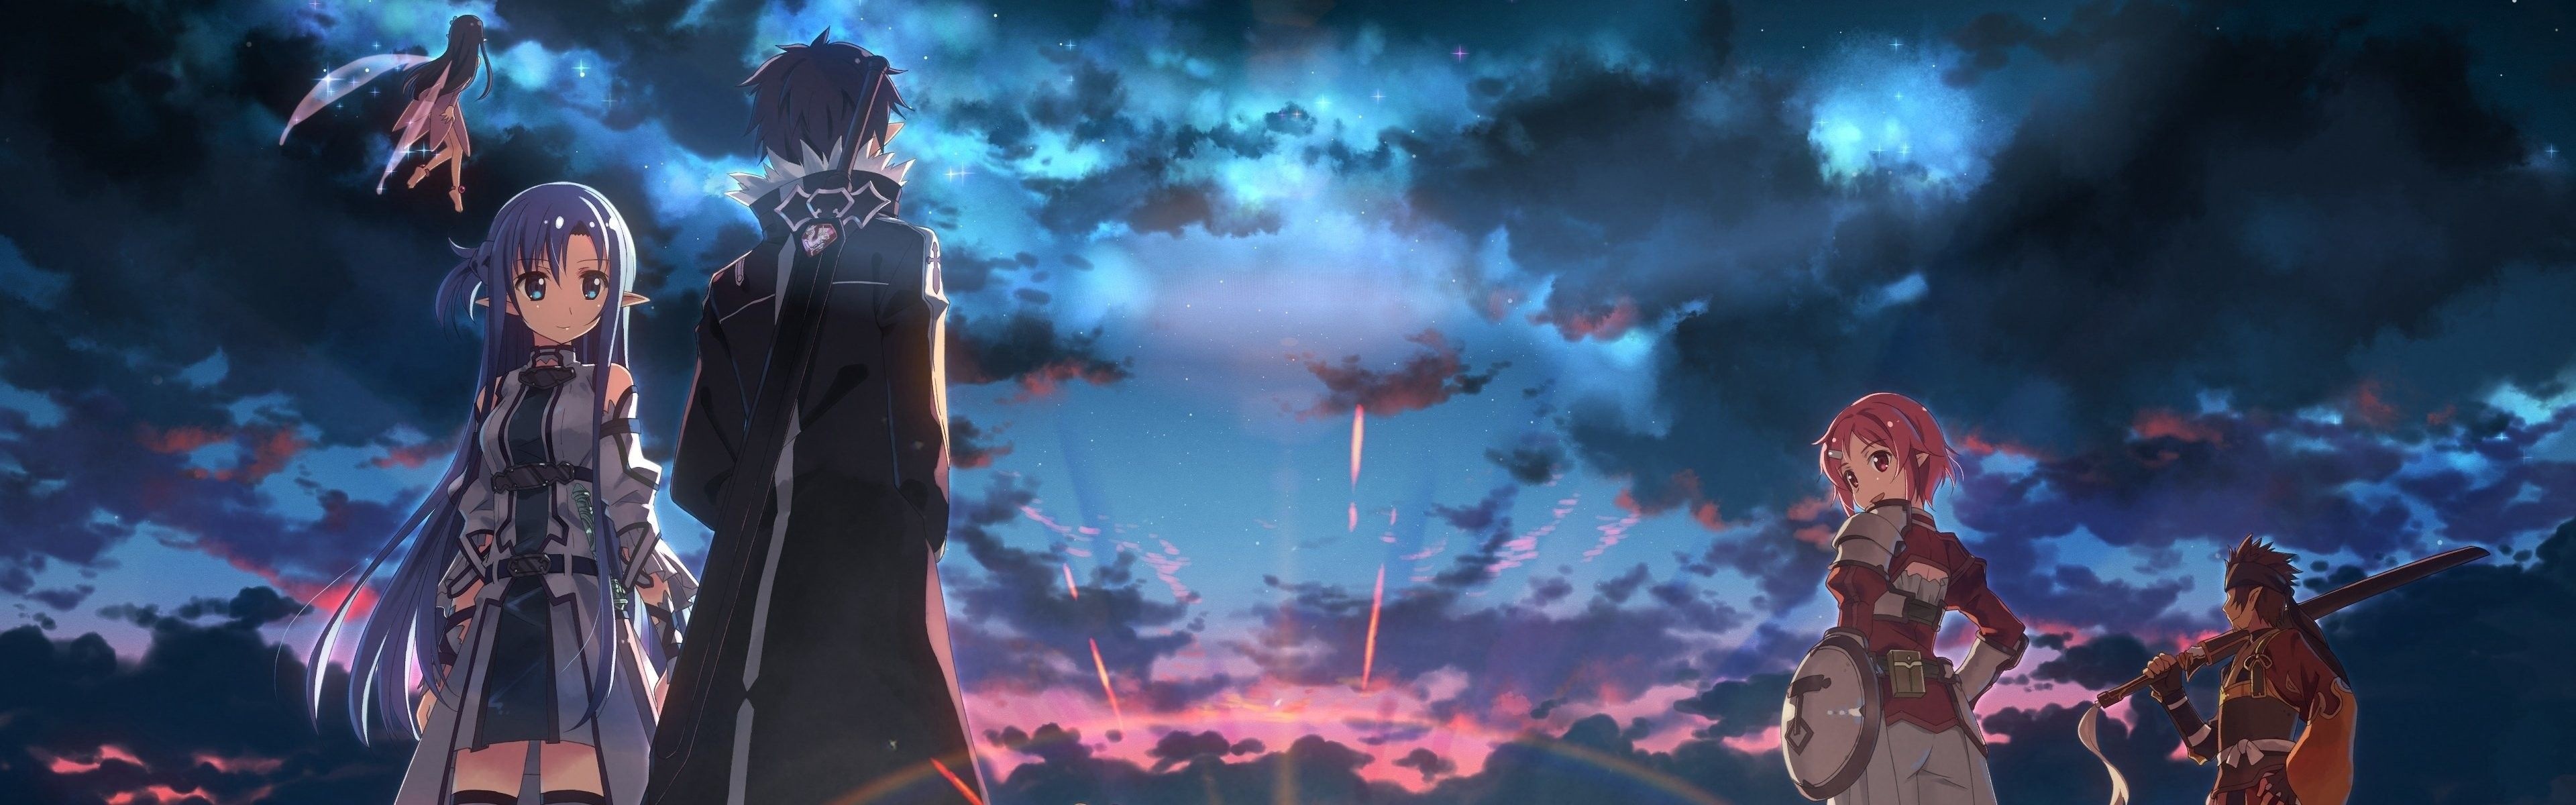 Sword Art Online anime, Dual monitor wallpapers, 3840x1200 Dual Screen Desktop